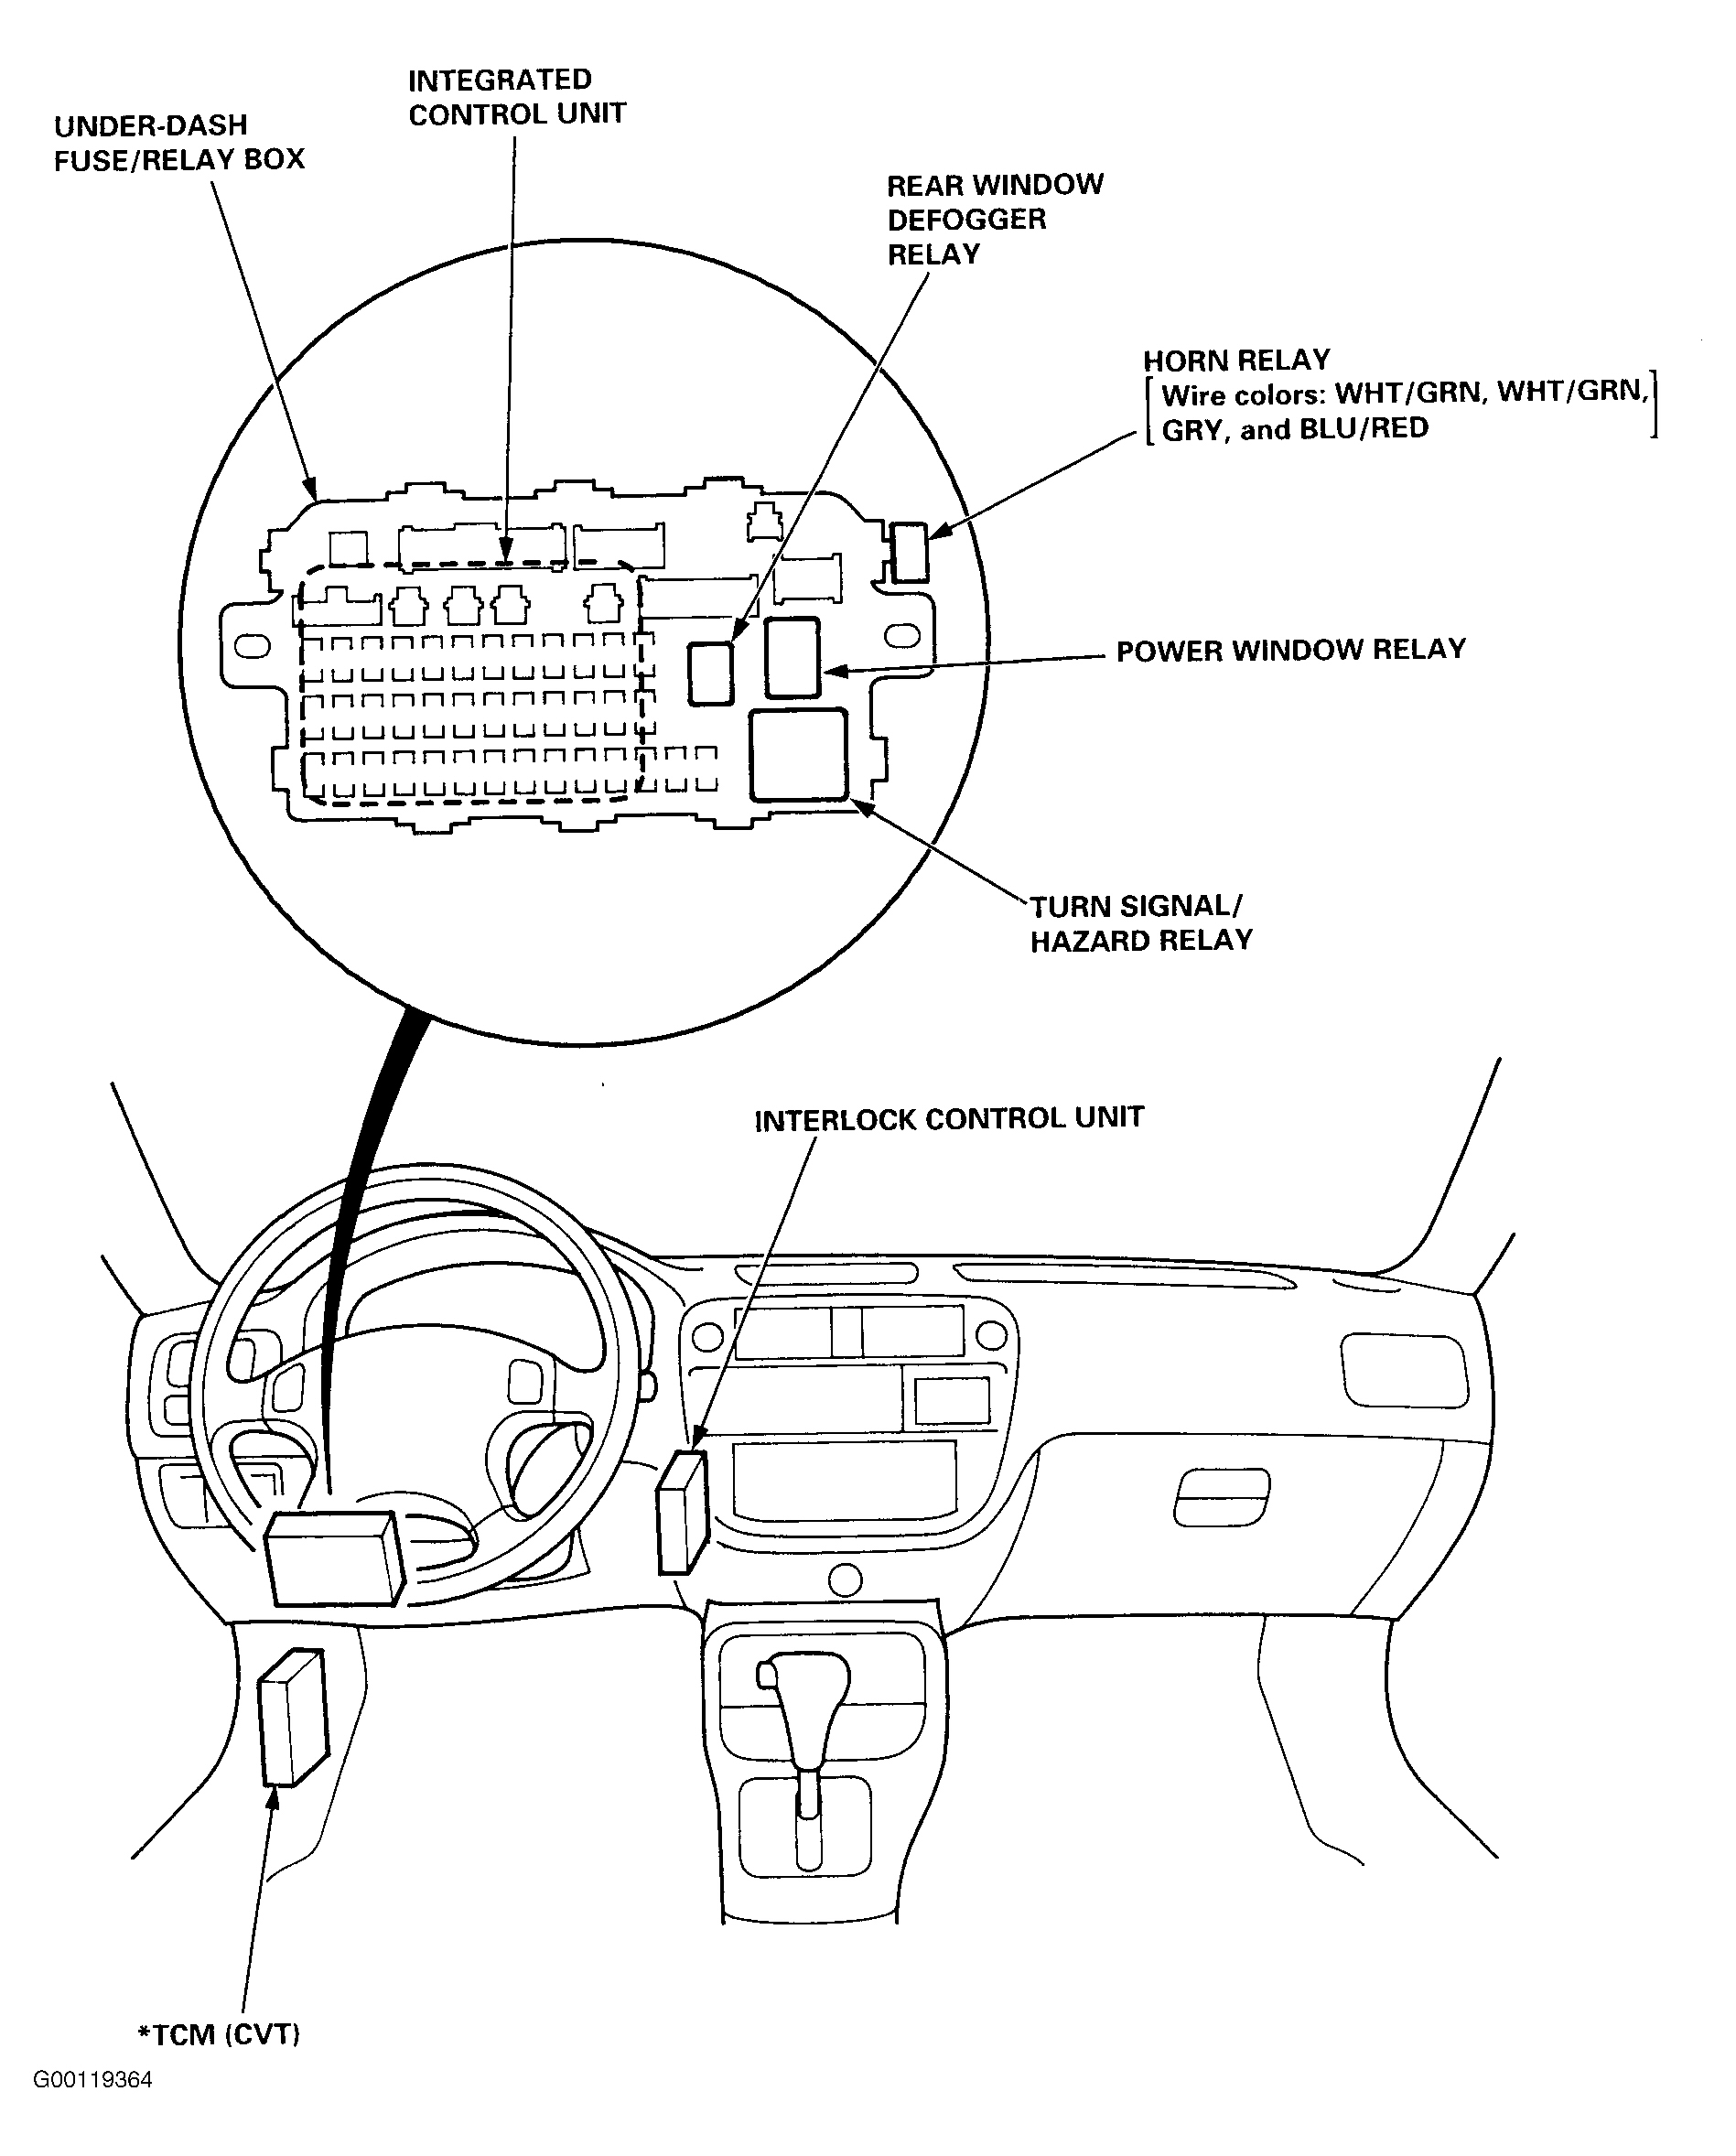 Honda Civic EX 1996 - Component Locations -  Locating Under-Dash Fuse/Relay Box (1996-97)